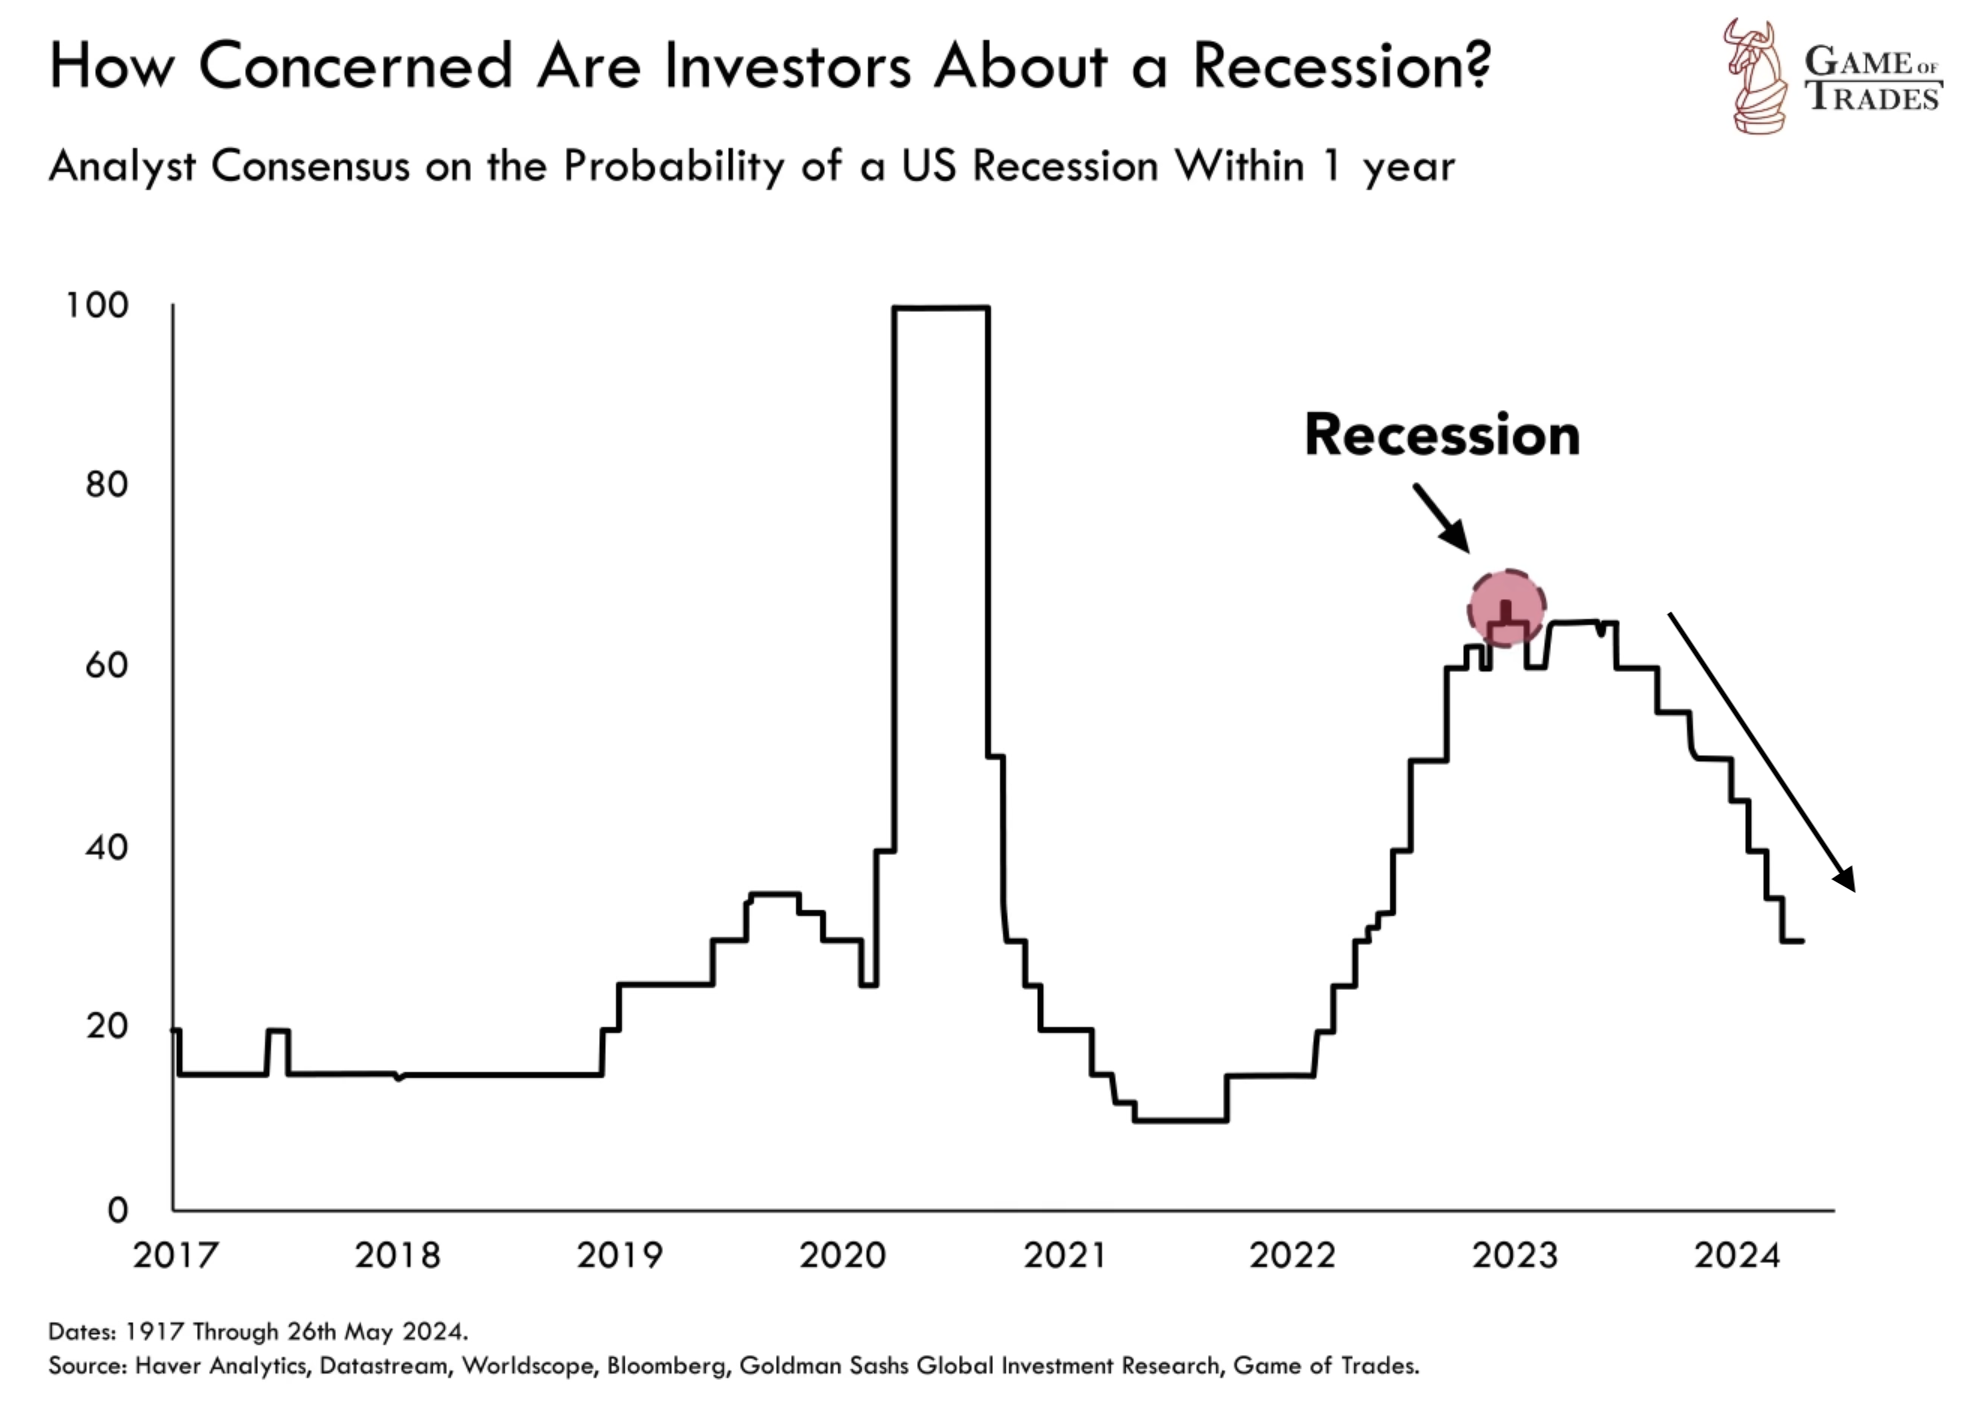 Recession consensus about recession